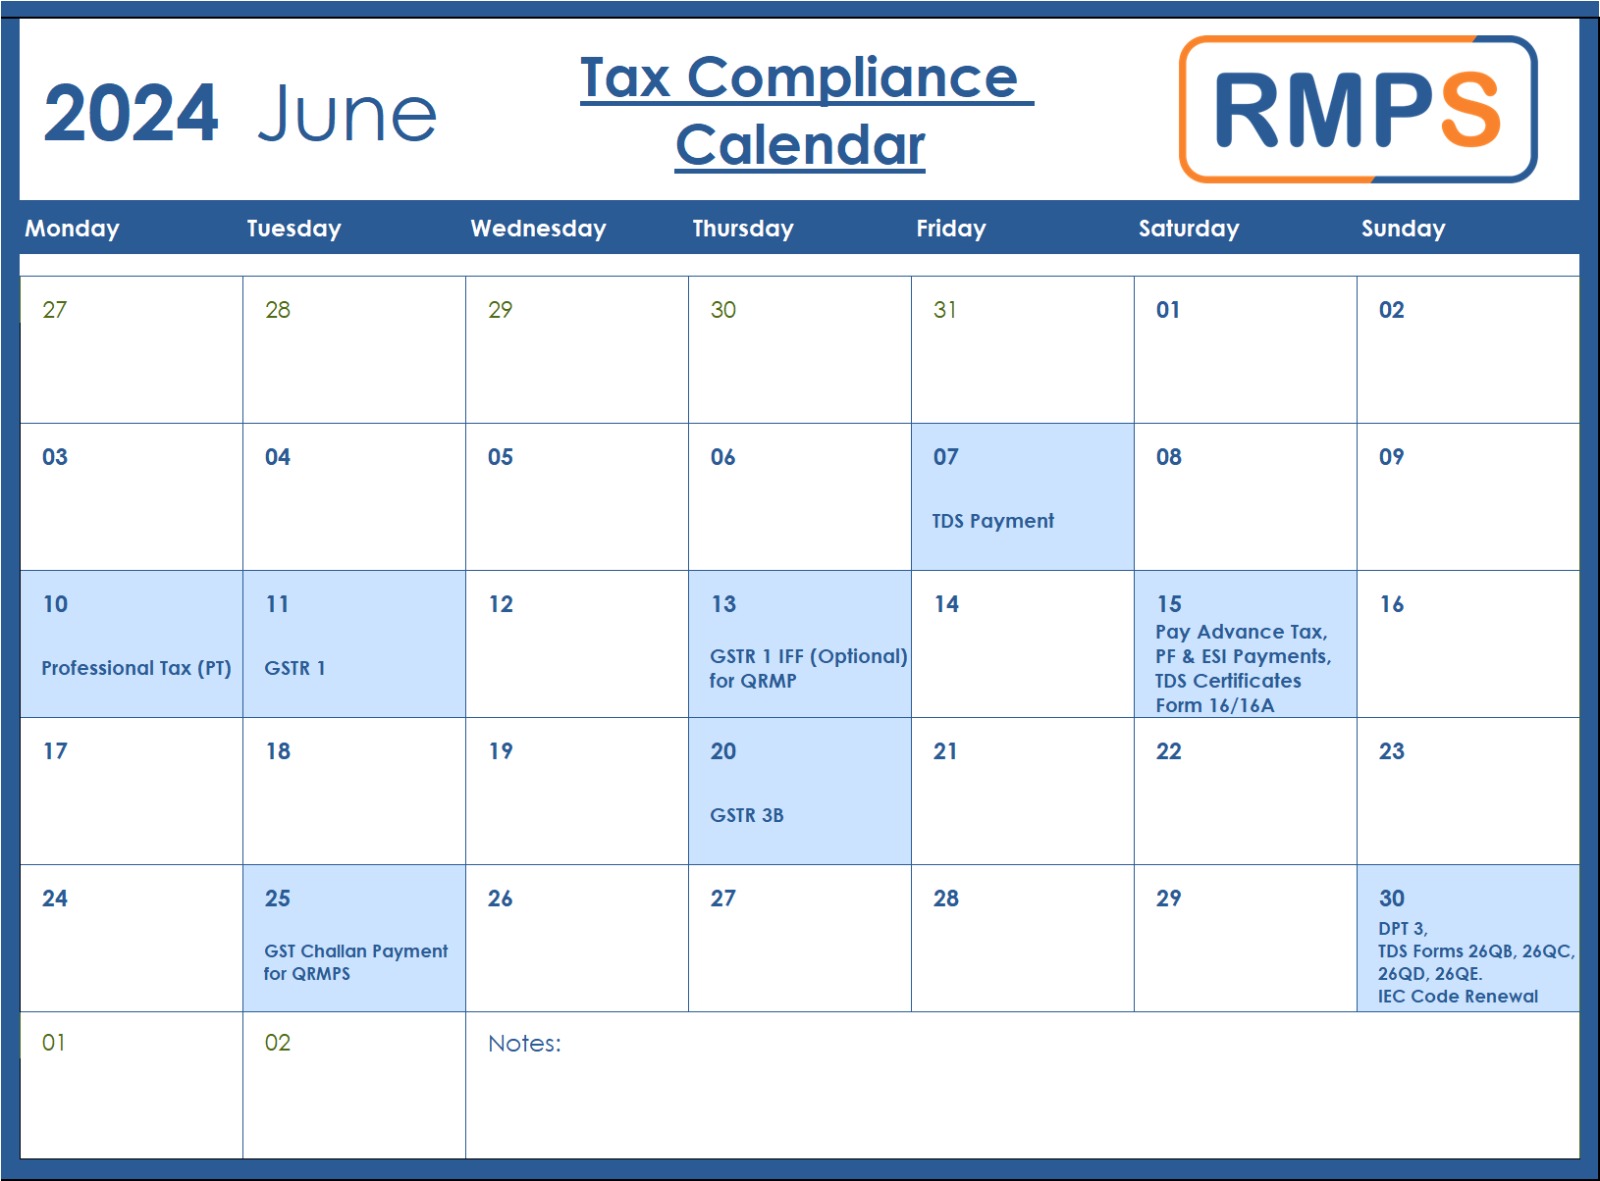 June 2024 Tax Compliance Calendar: Key Deadlines and Tips